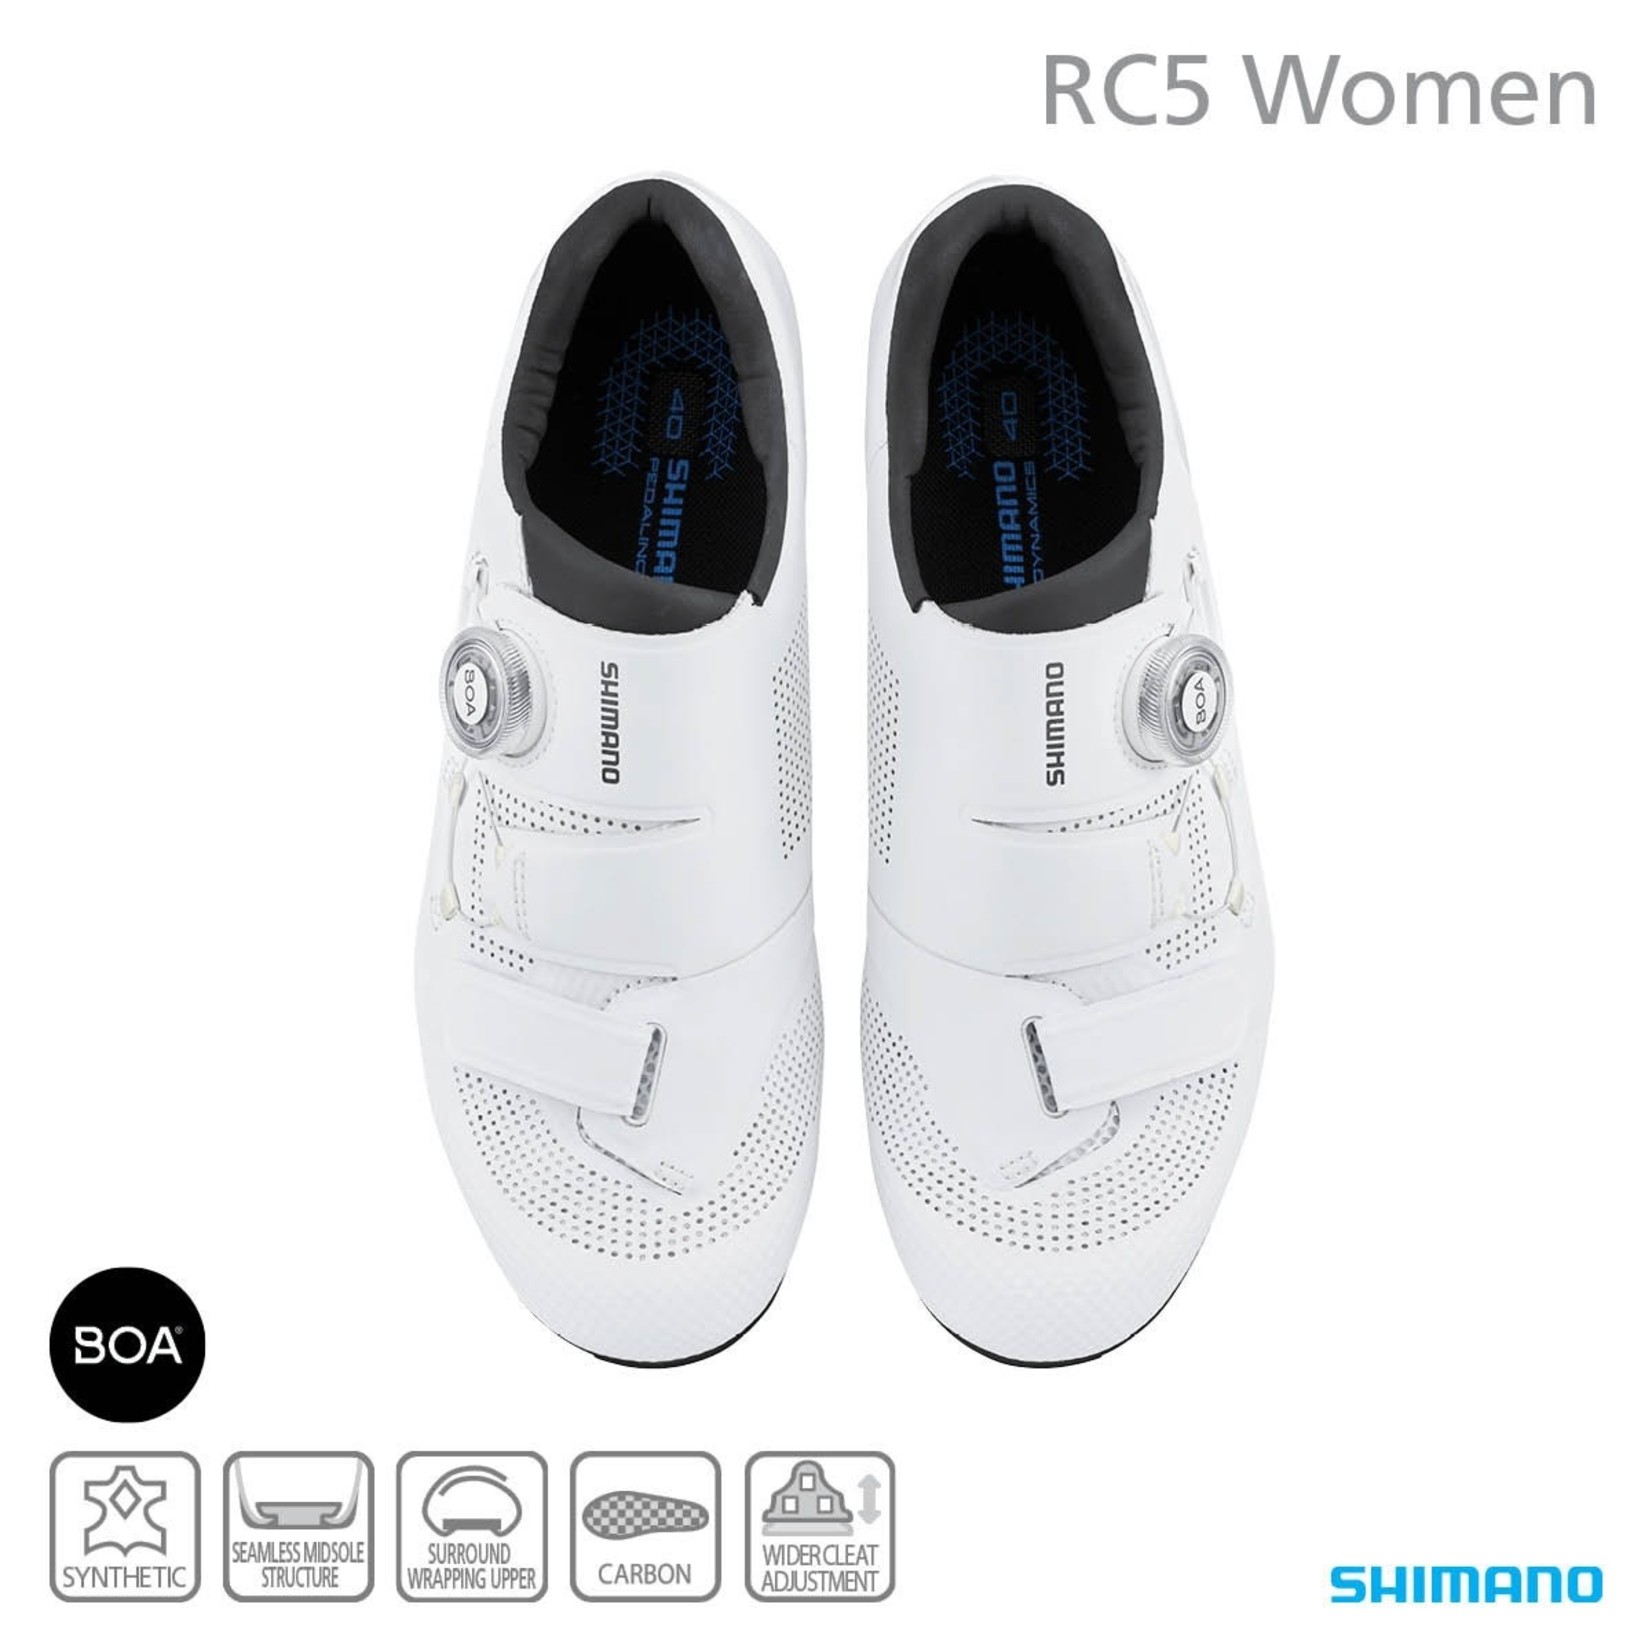 Shimano Shimano SH-RC502 Women's Road Bike Cycling Shoes-White Synthetic Leather